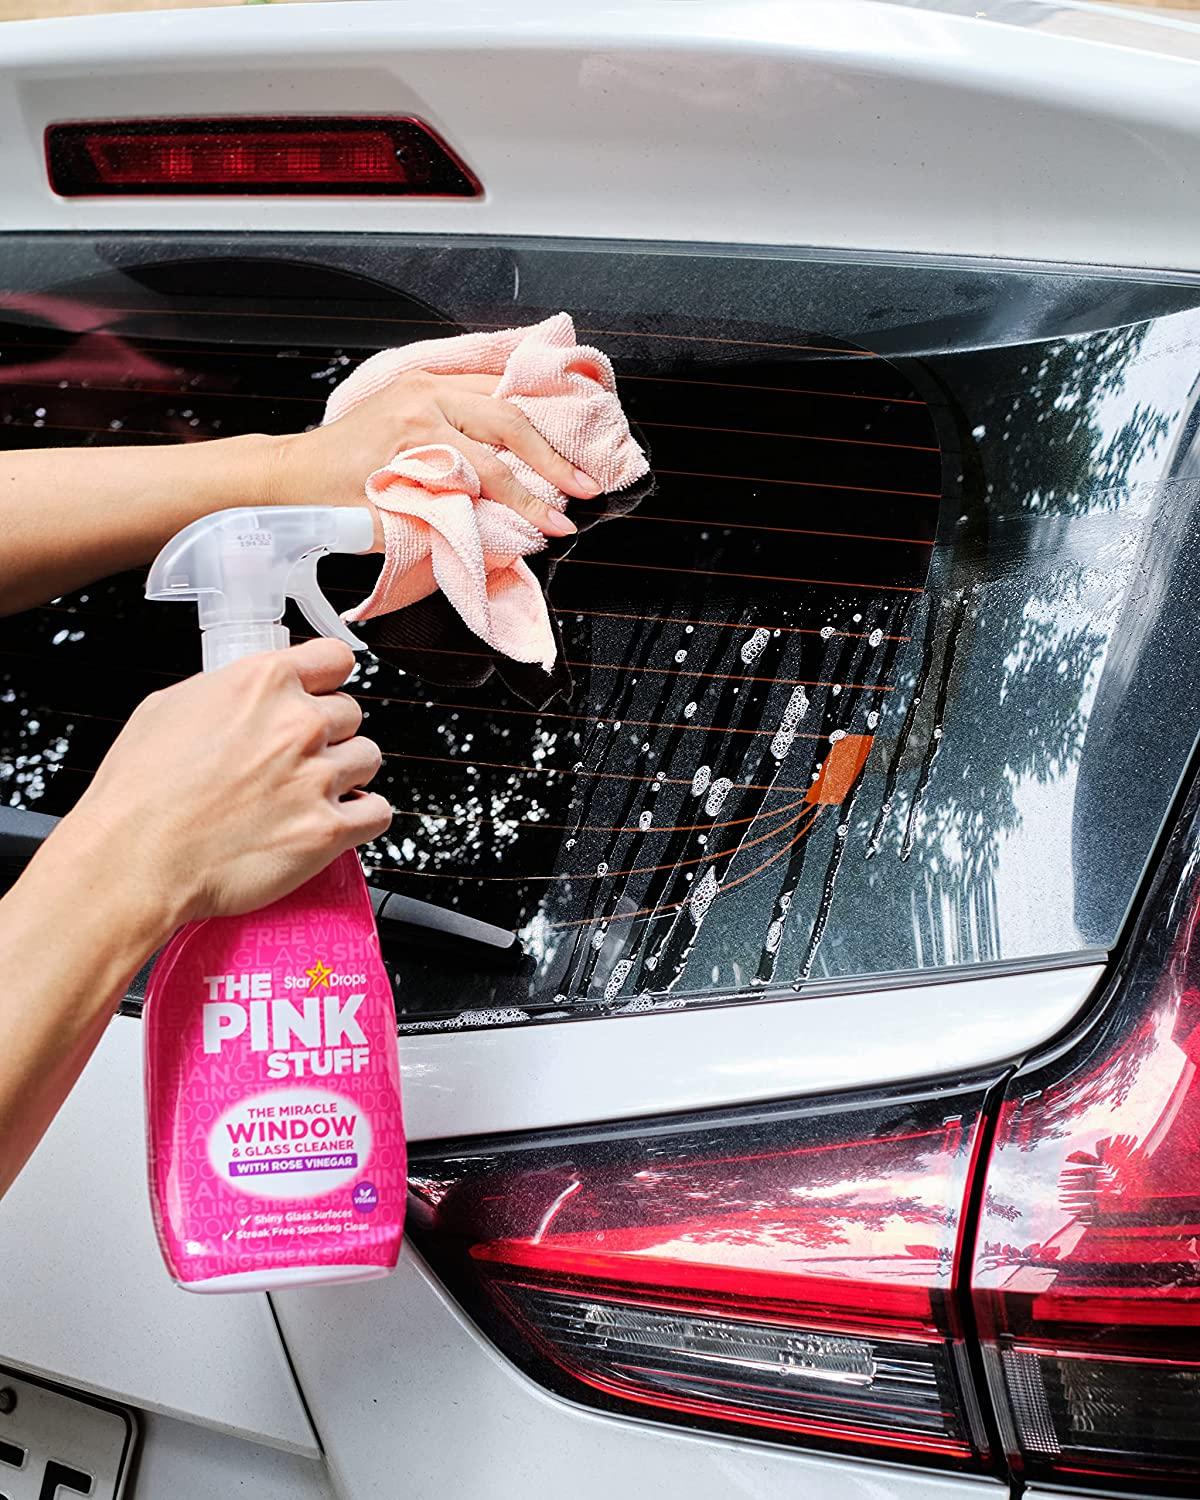 Star Drops The Pink Stuff Bathroom Foam Cleaner 25.4 oz